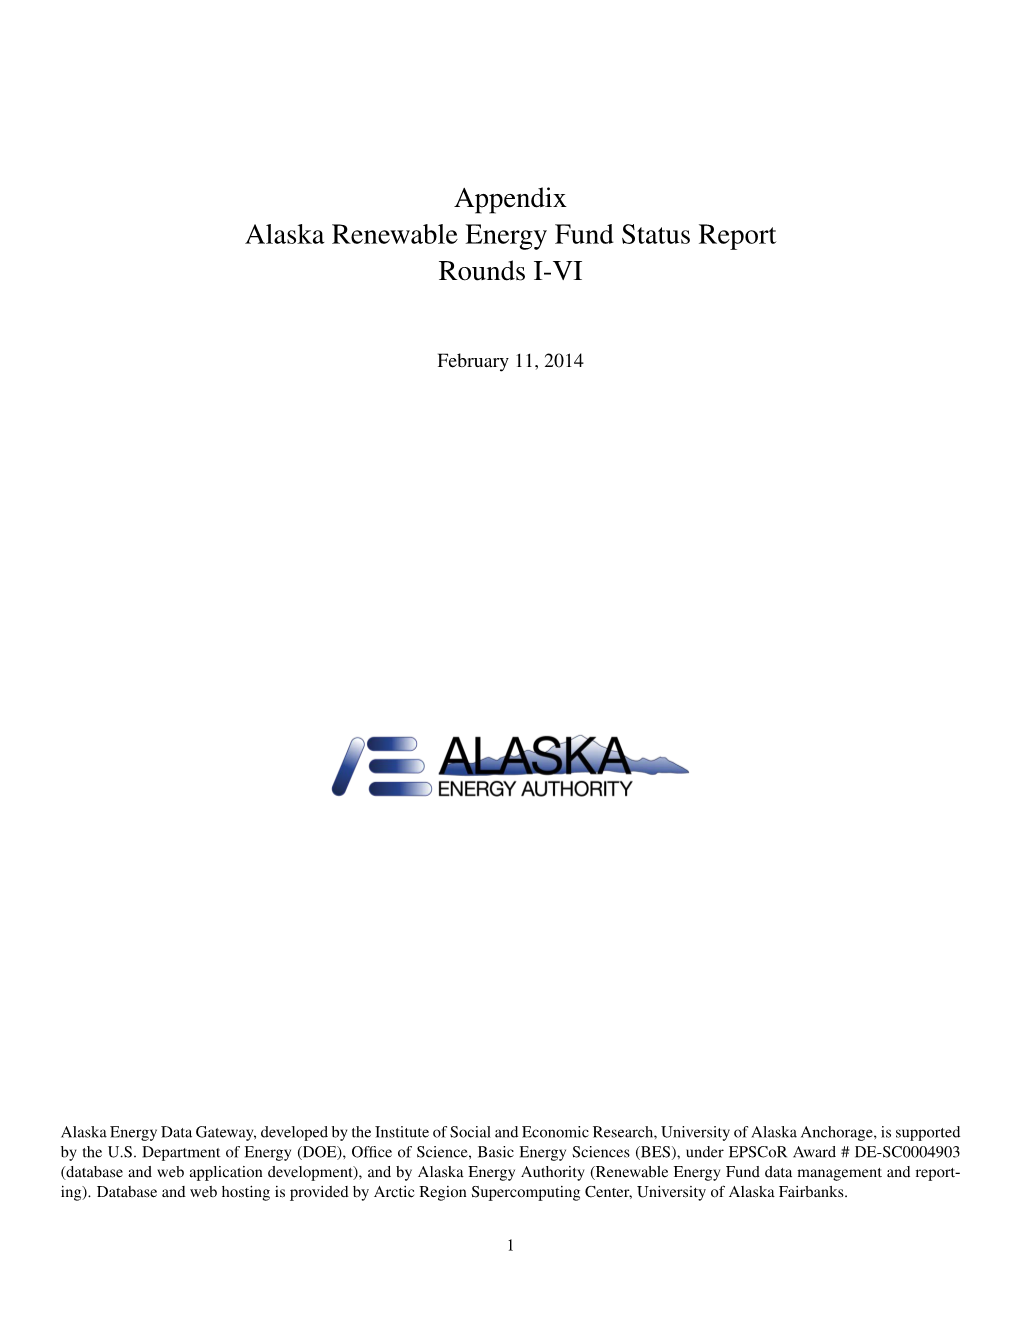 Appendix Alaska Renewable Energy Fund Status Report Rounds I-VI